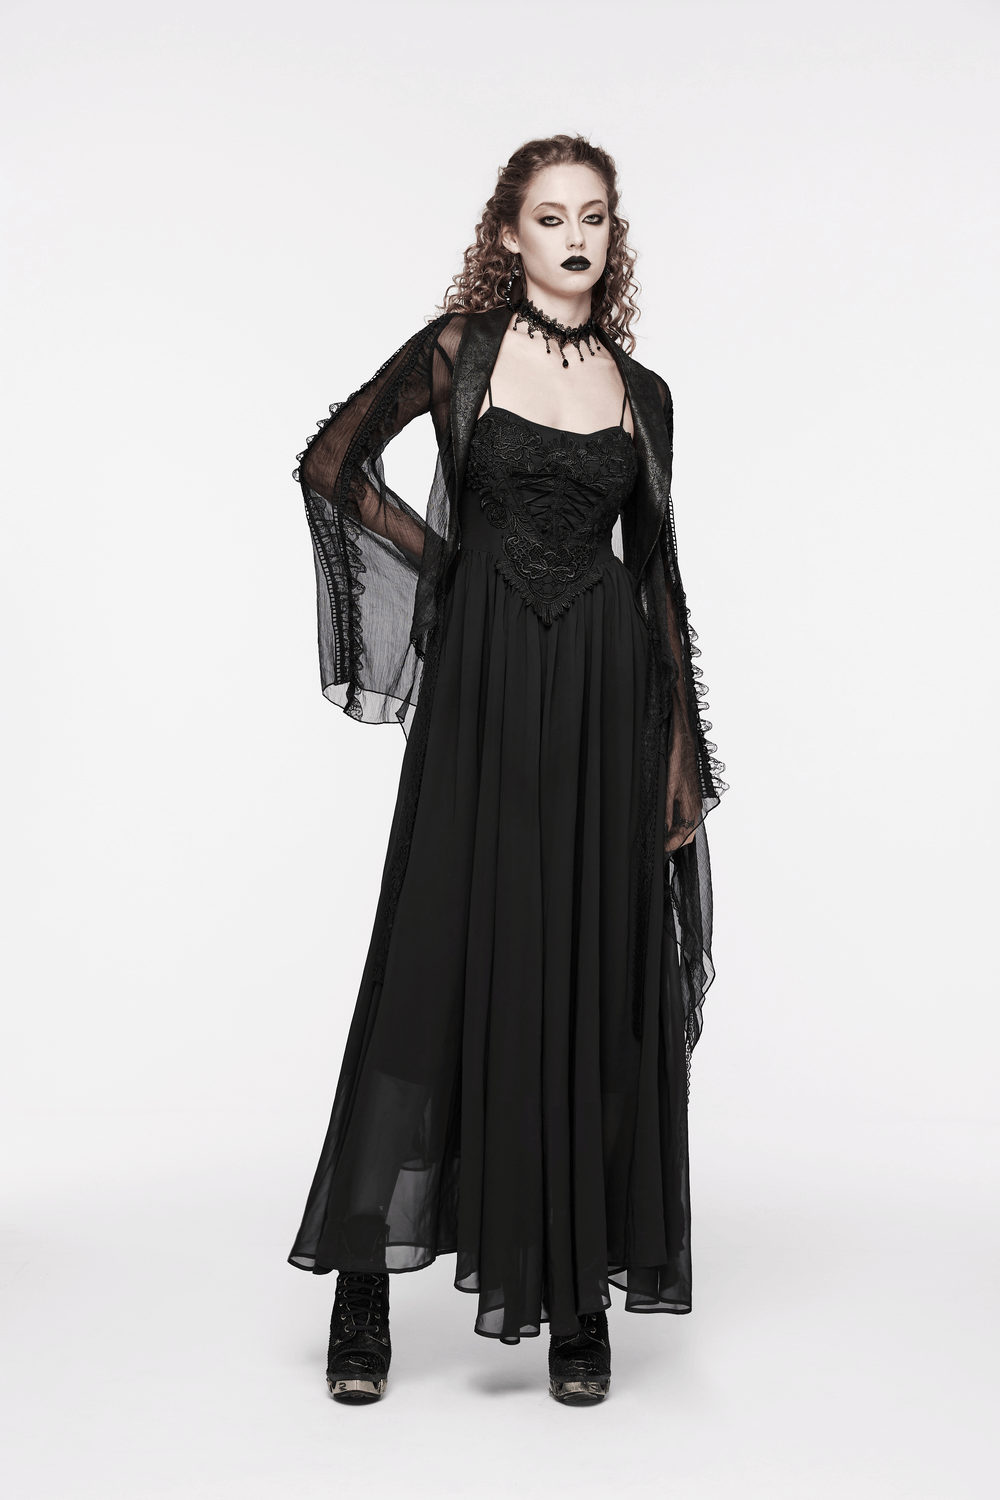 Stunning Women's Black Long Dress with Adjustable Straps